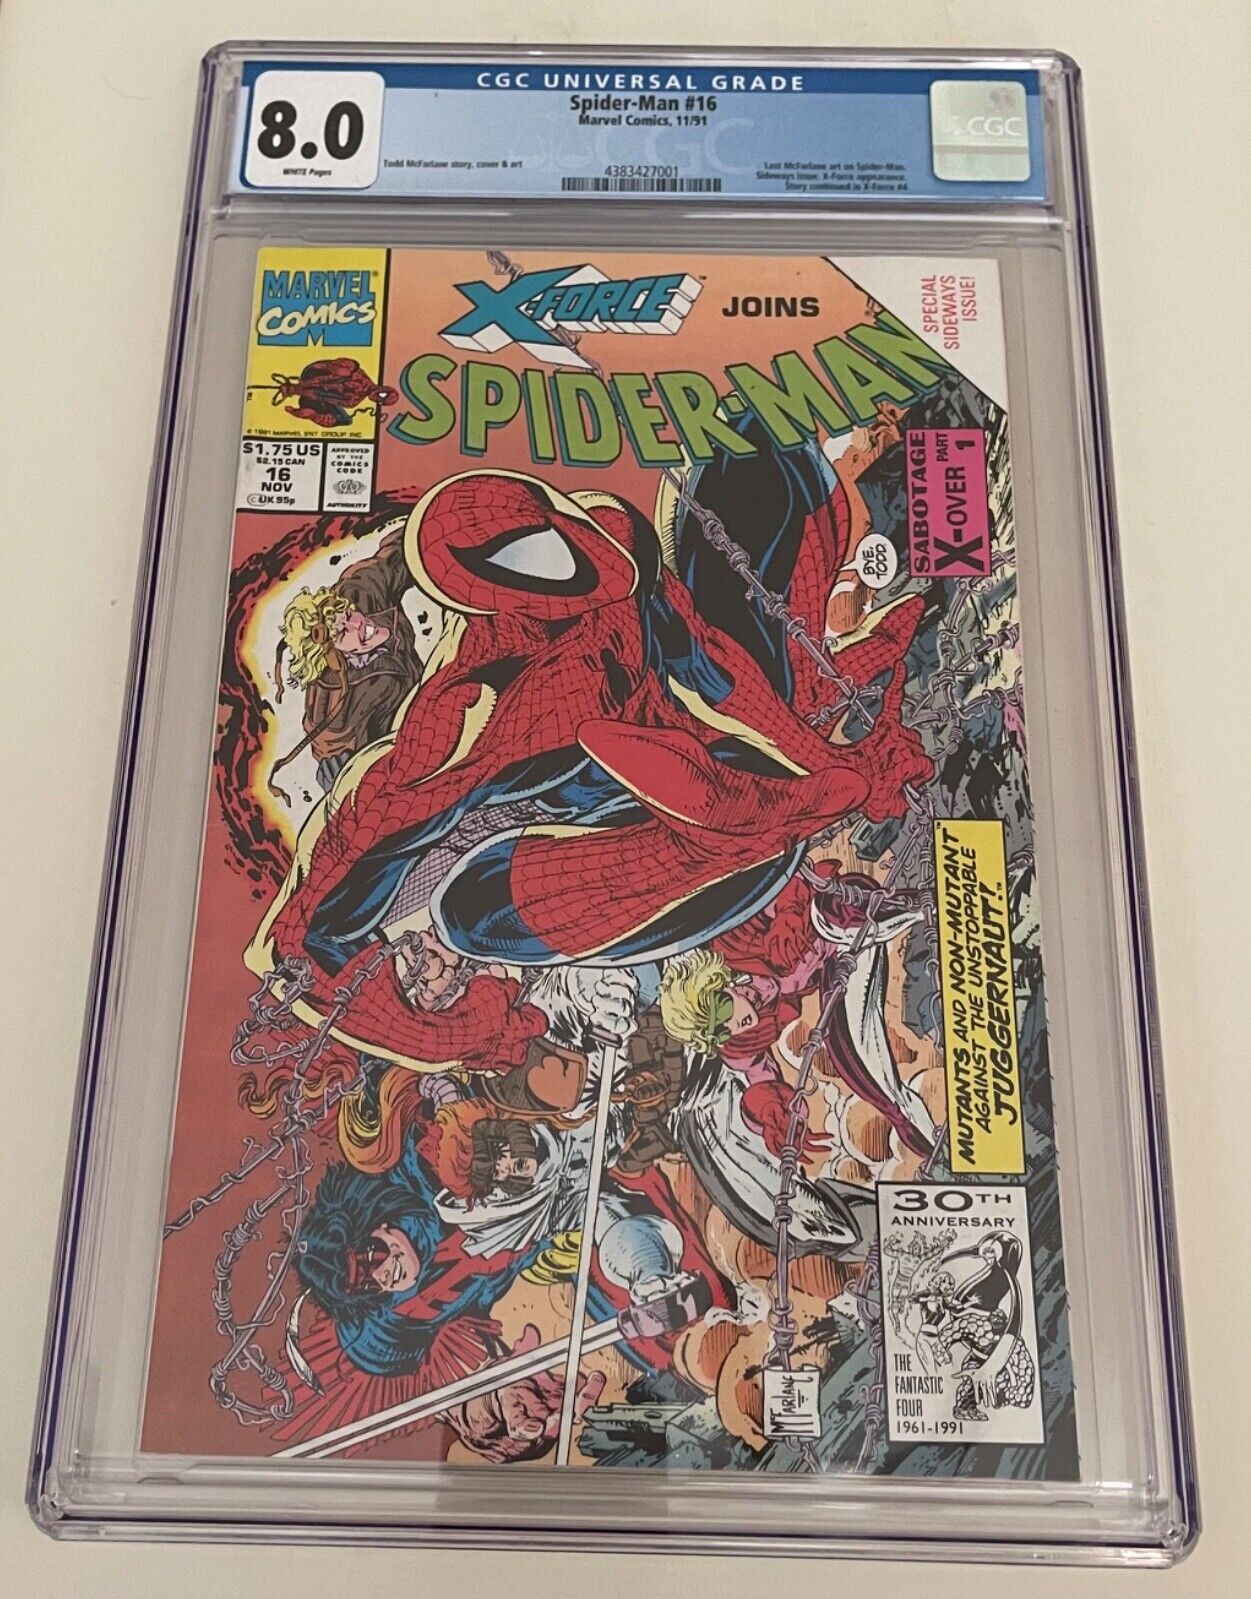 Spider-Man #16 - Marvel Comics 1990 - FINAL McFarlane Art CGC 8.0